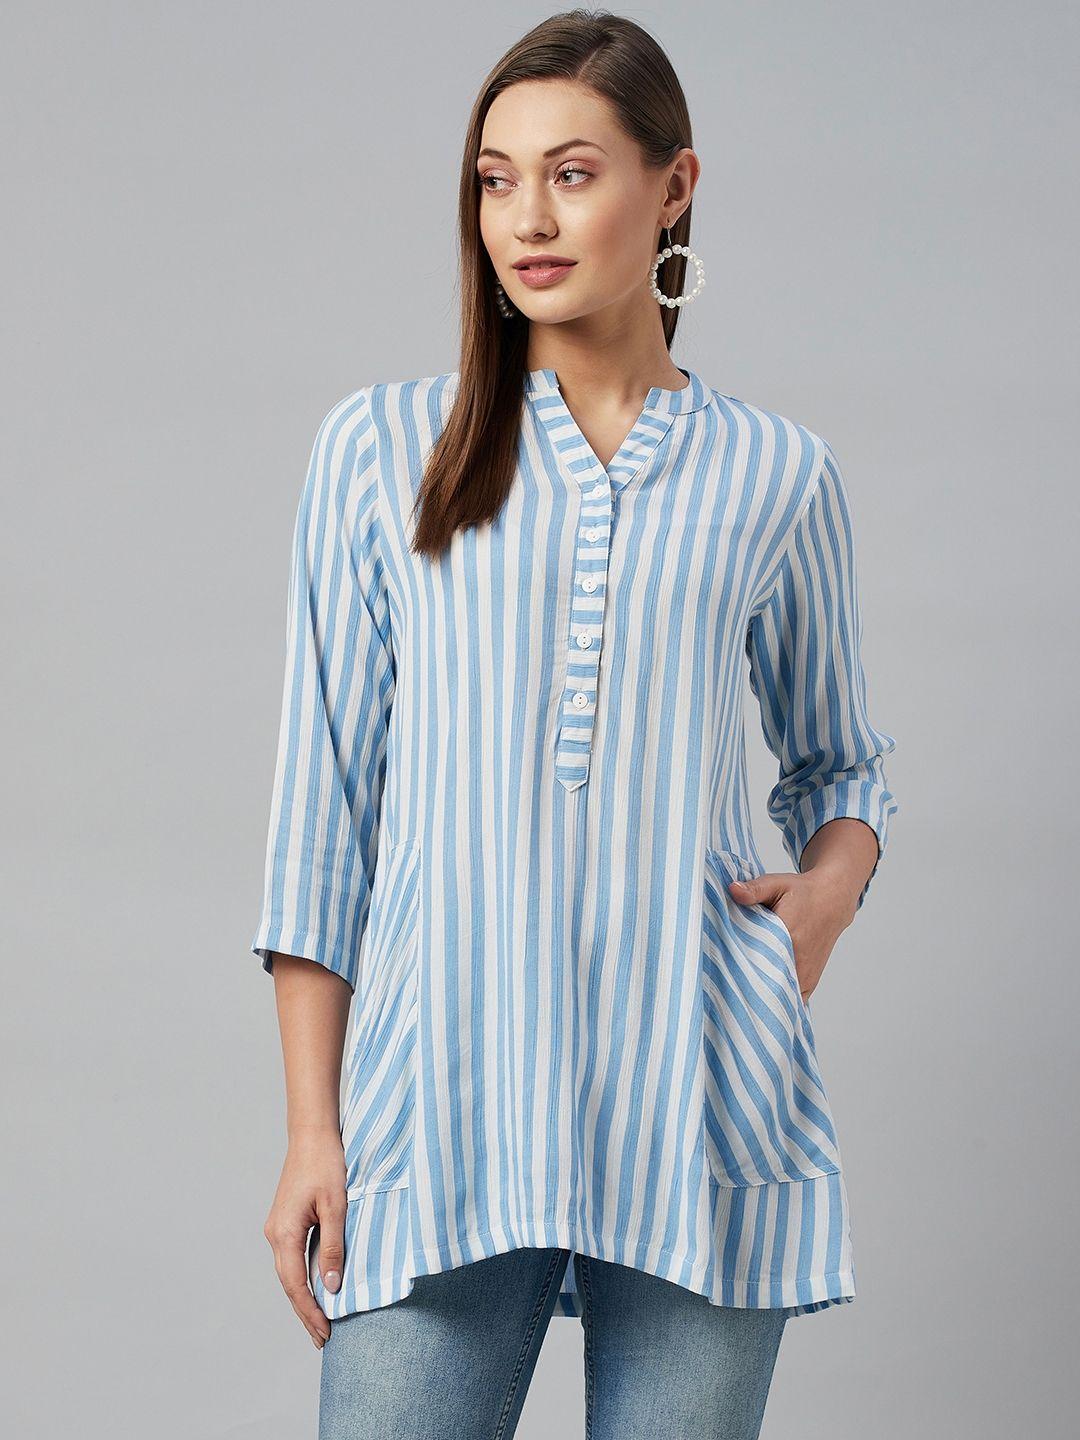 ayaany cream-coloured & blue striped mandarin collar shirt style longline top